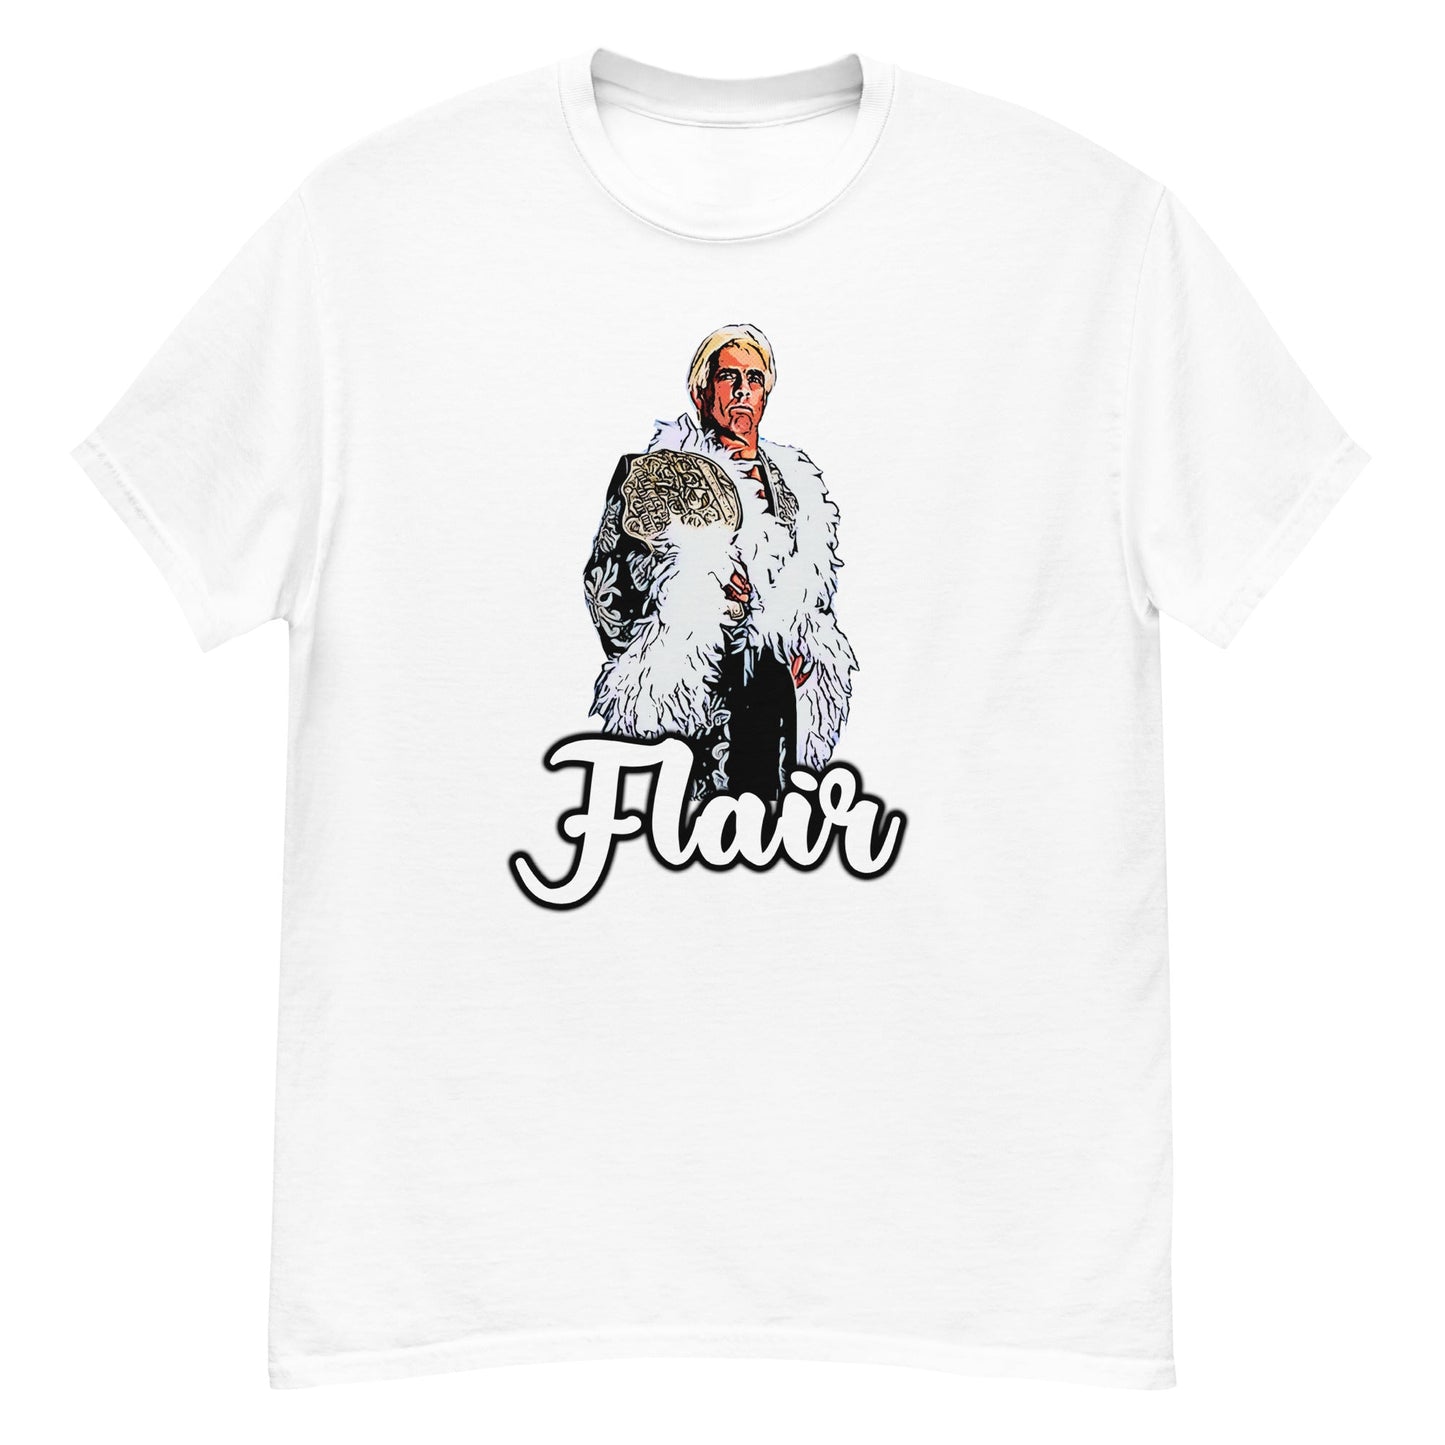 Ric Flair 80s Wrestling Tee - Retro Wrestling Shirt - thenightmareinc